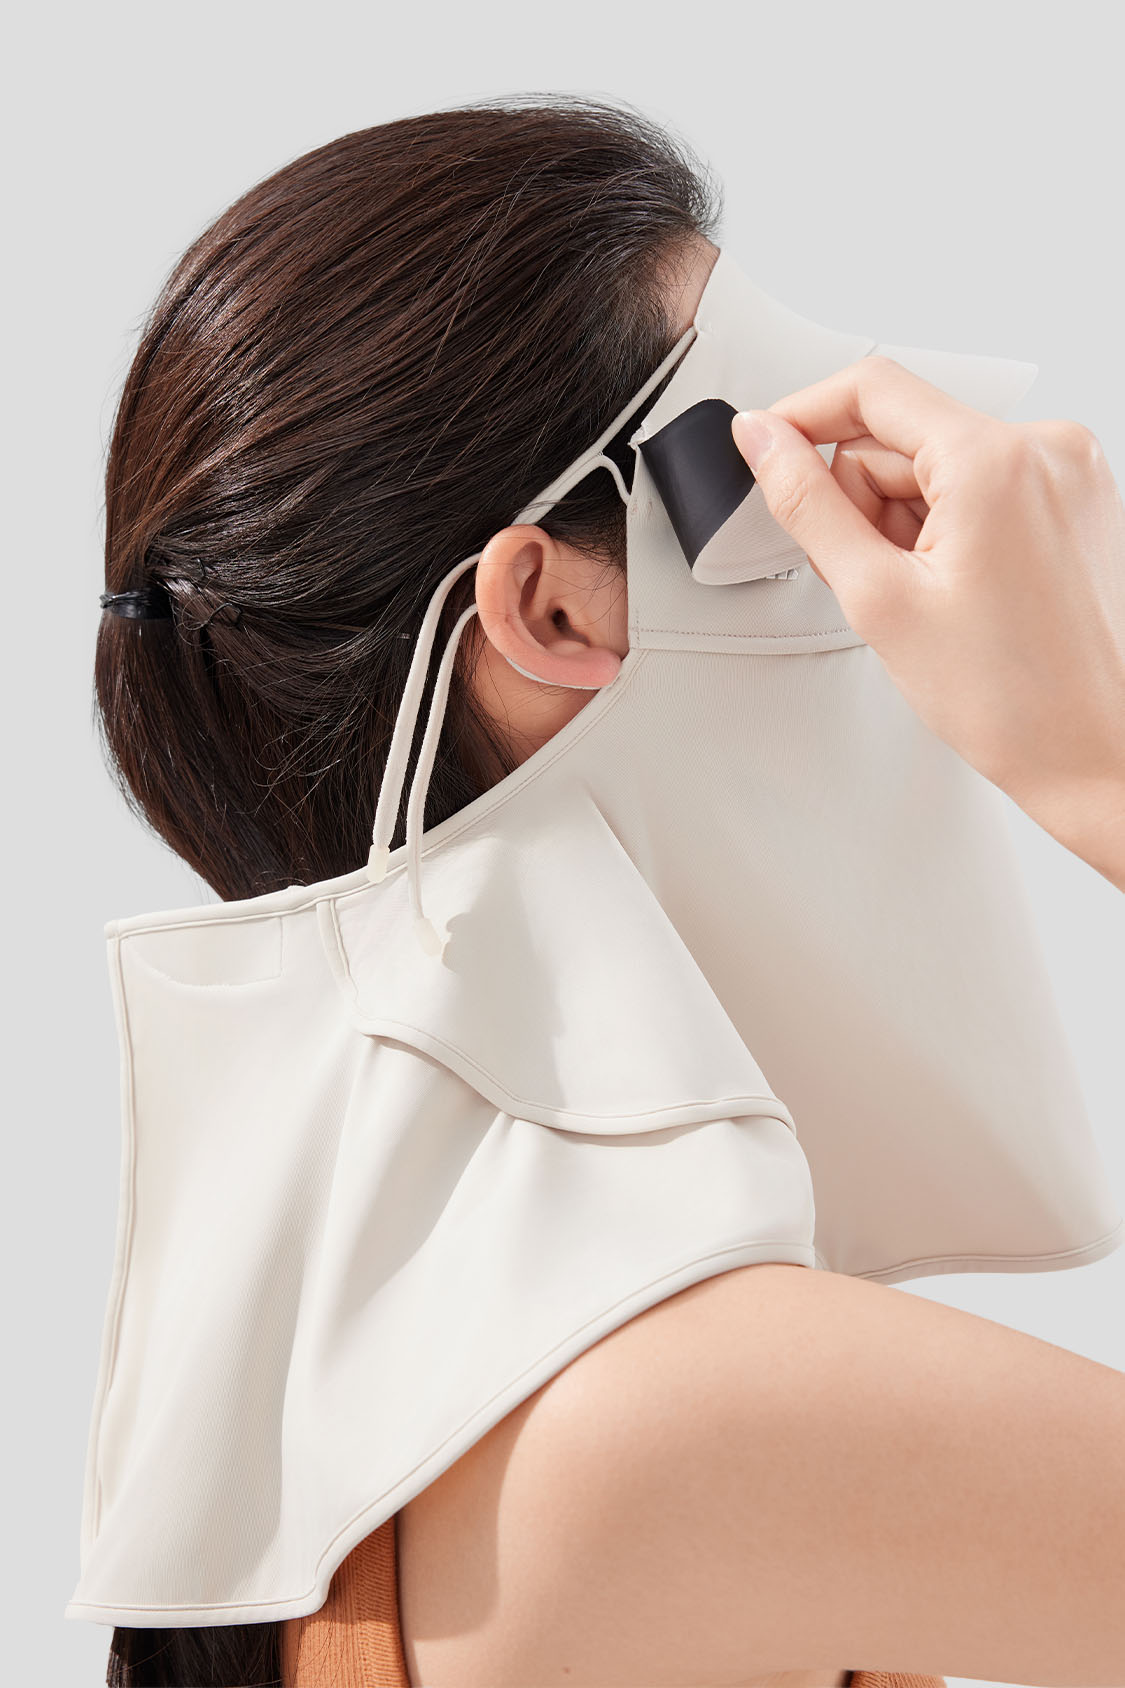 Shield - Women's Sun Protection Neck Gaiter Face Mask UPF50+ Light Lotus Pink / One Size-Adjustable